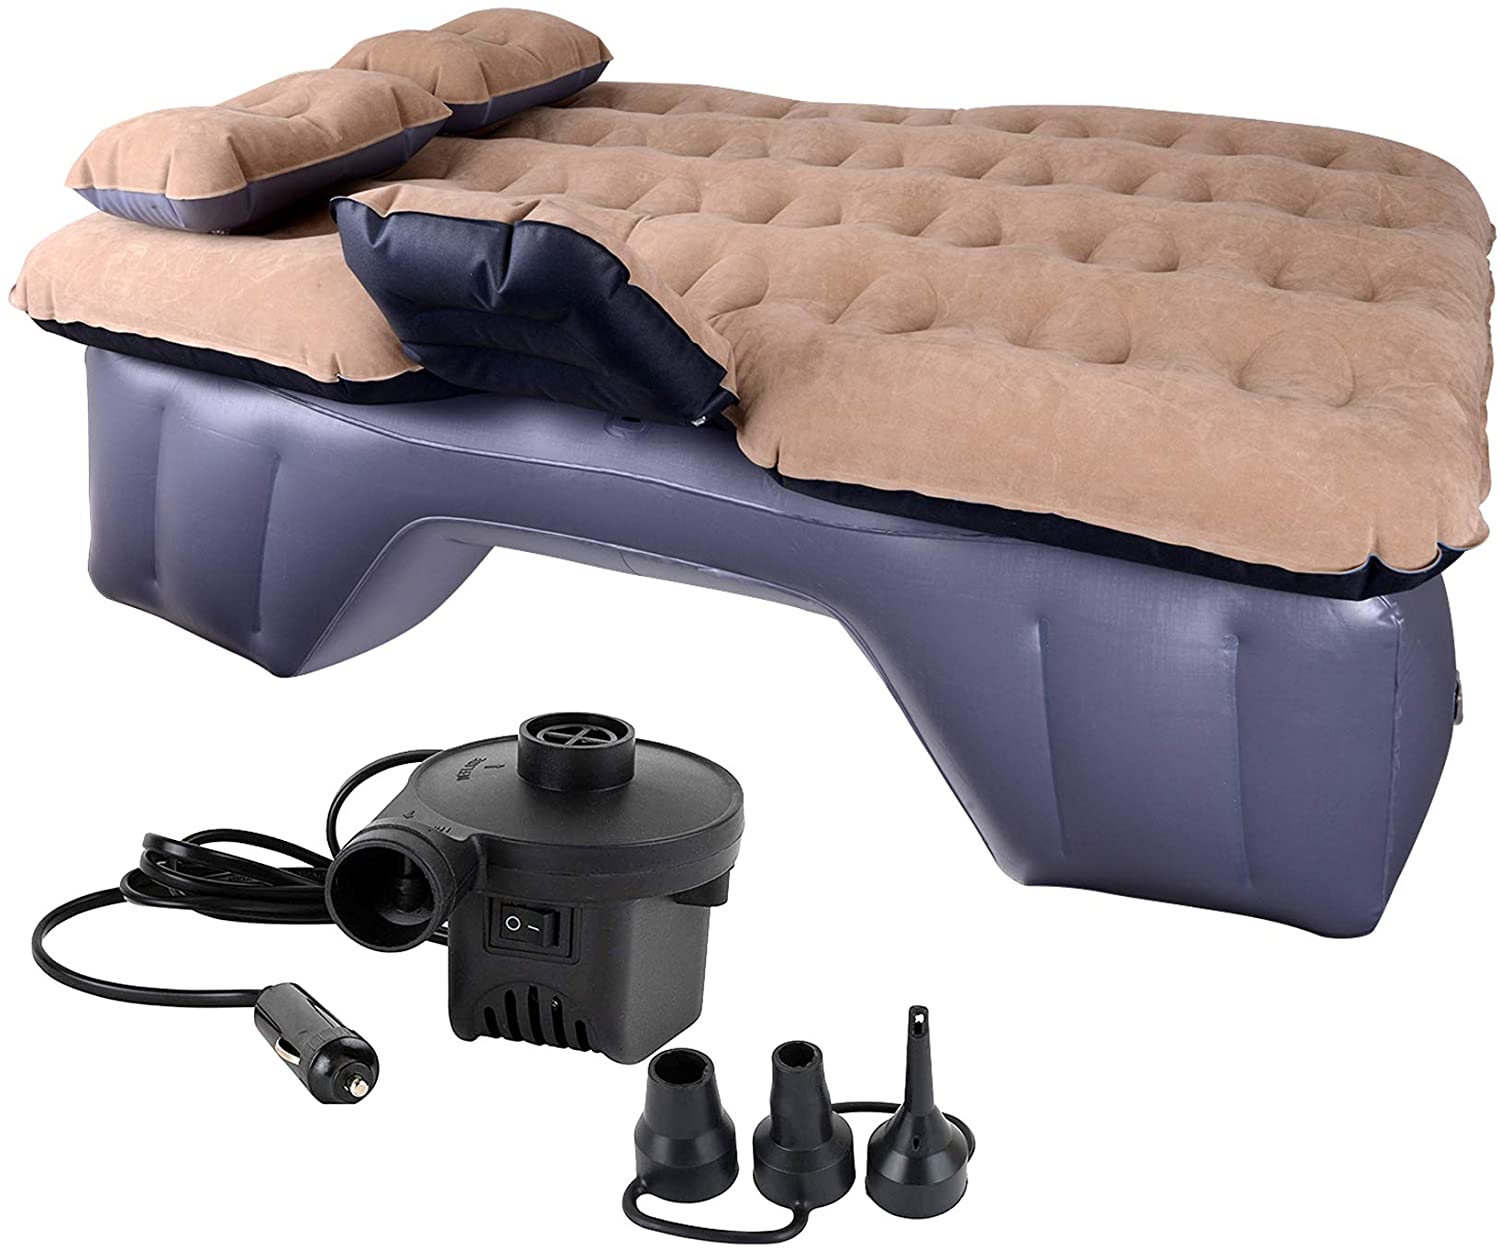 backseat air mattress in store